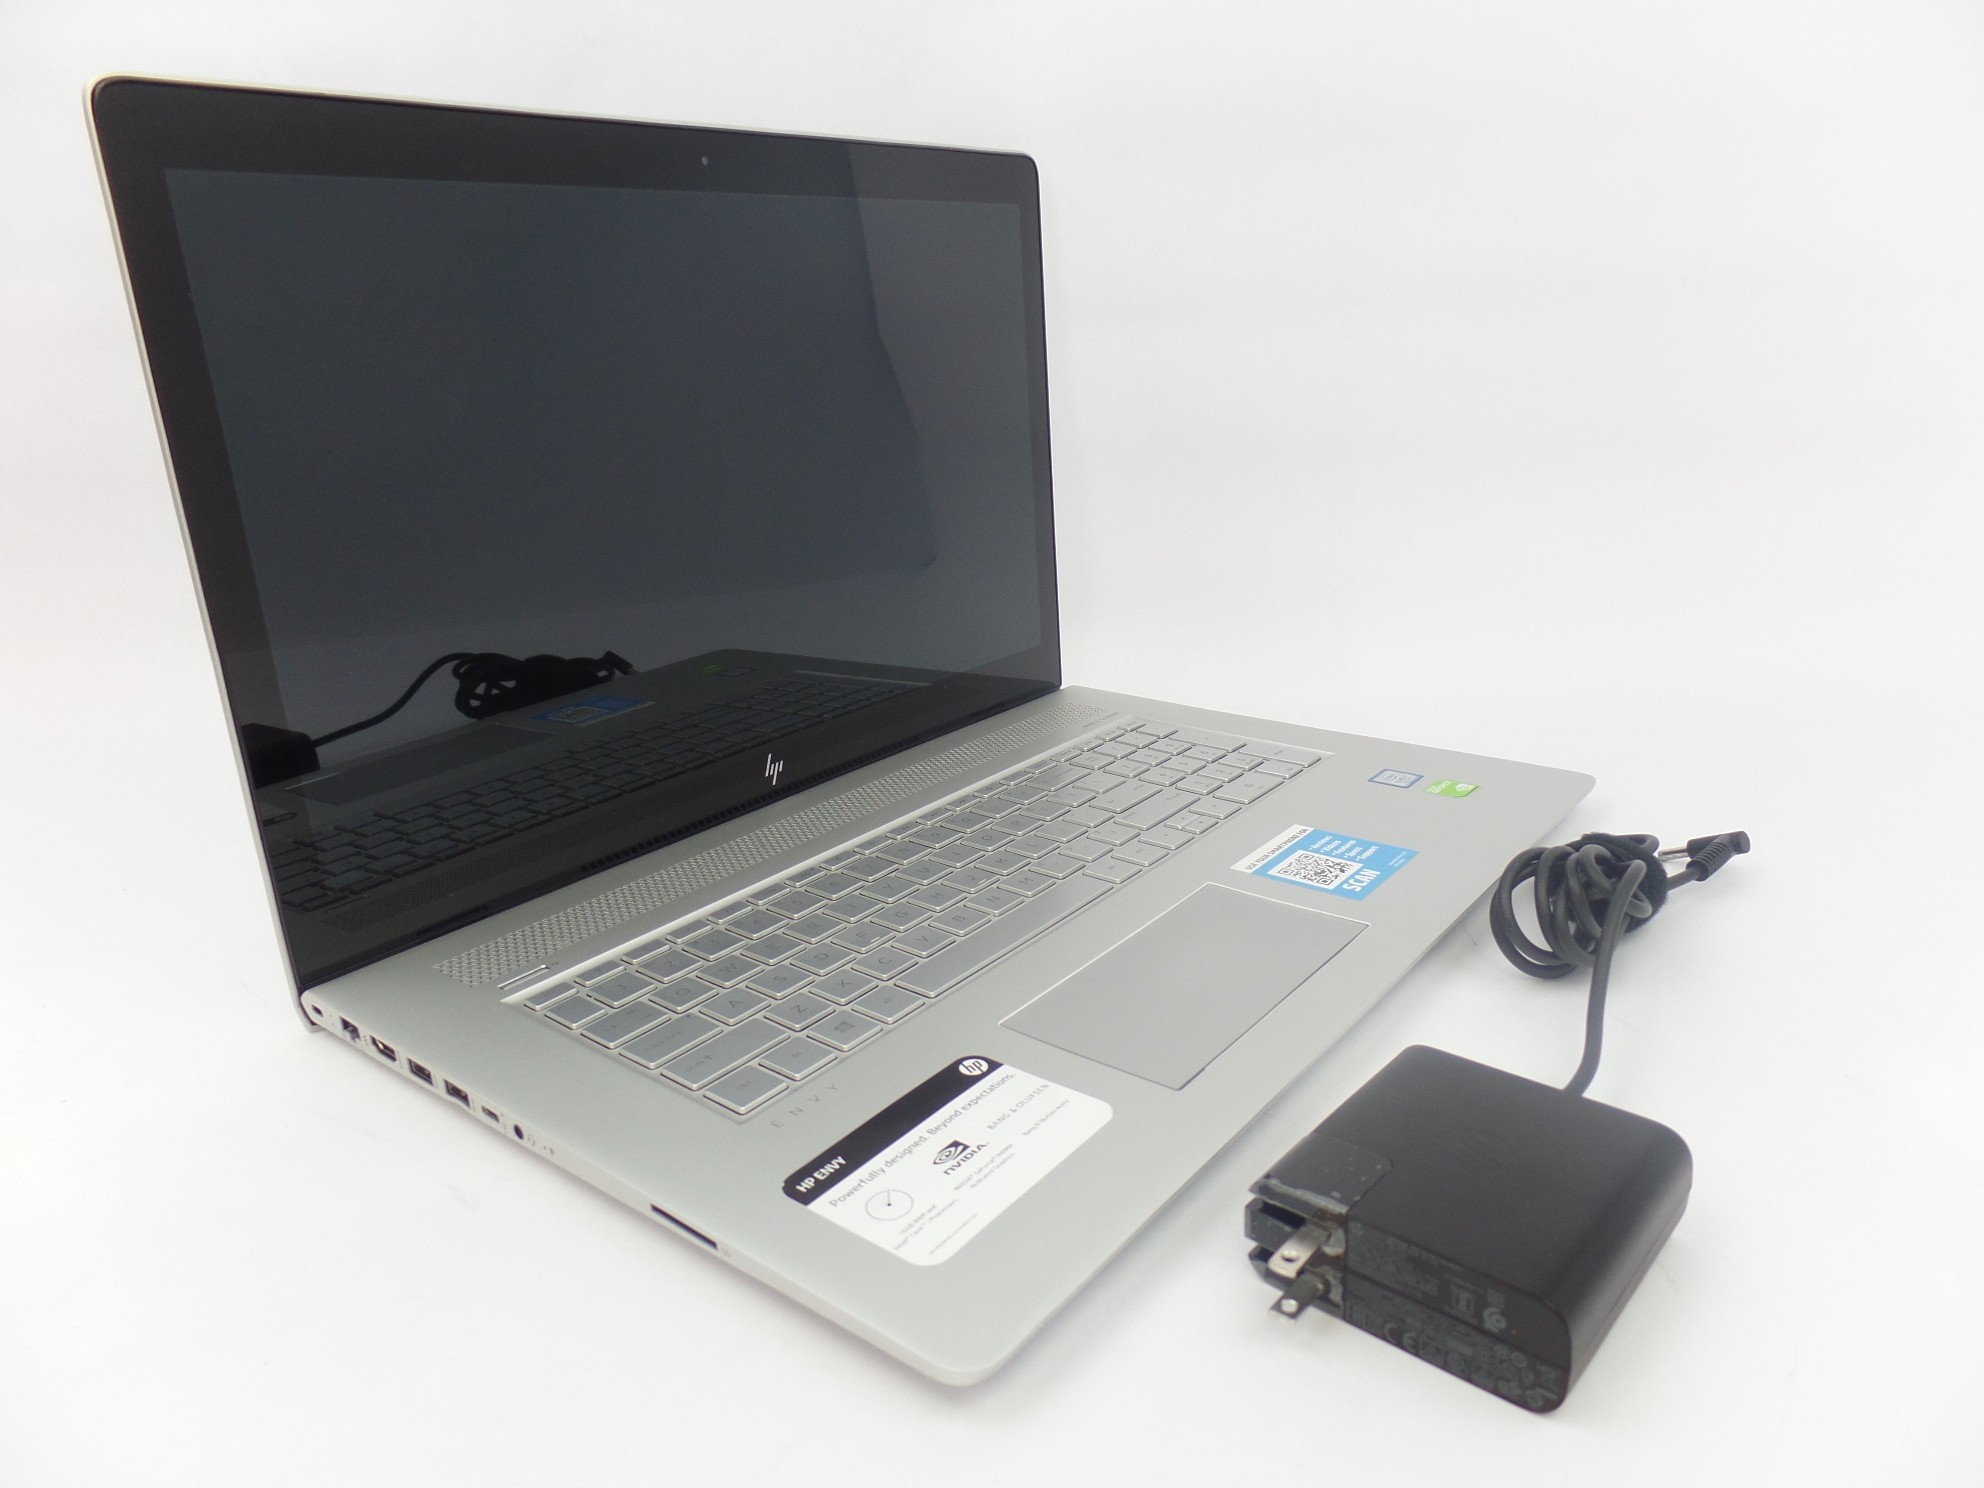 HP ENVY 17m-ae011dx 17.3" FHD Touch i7-7500U 16GB 1TB 940MX W10H 1KT17UA Laptop